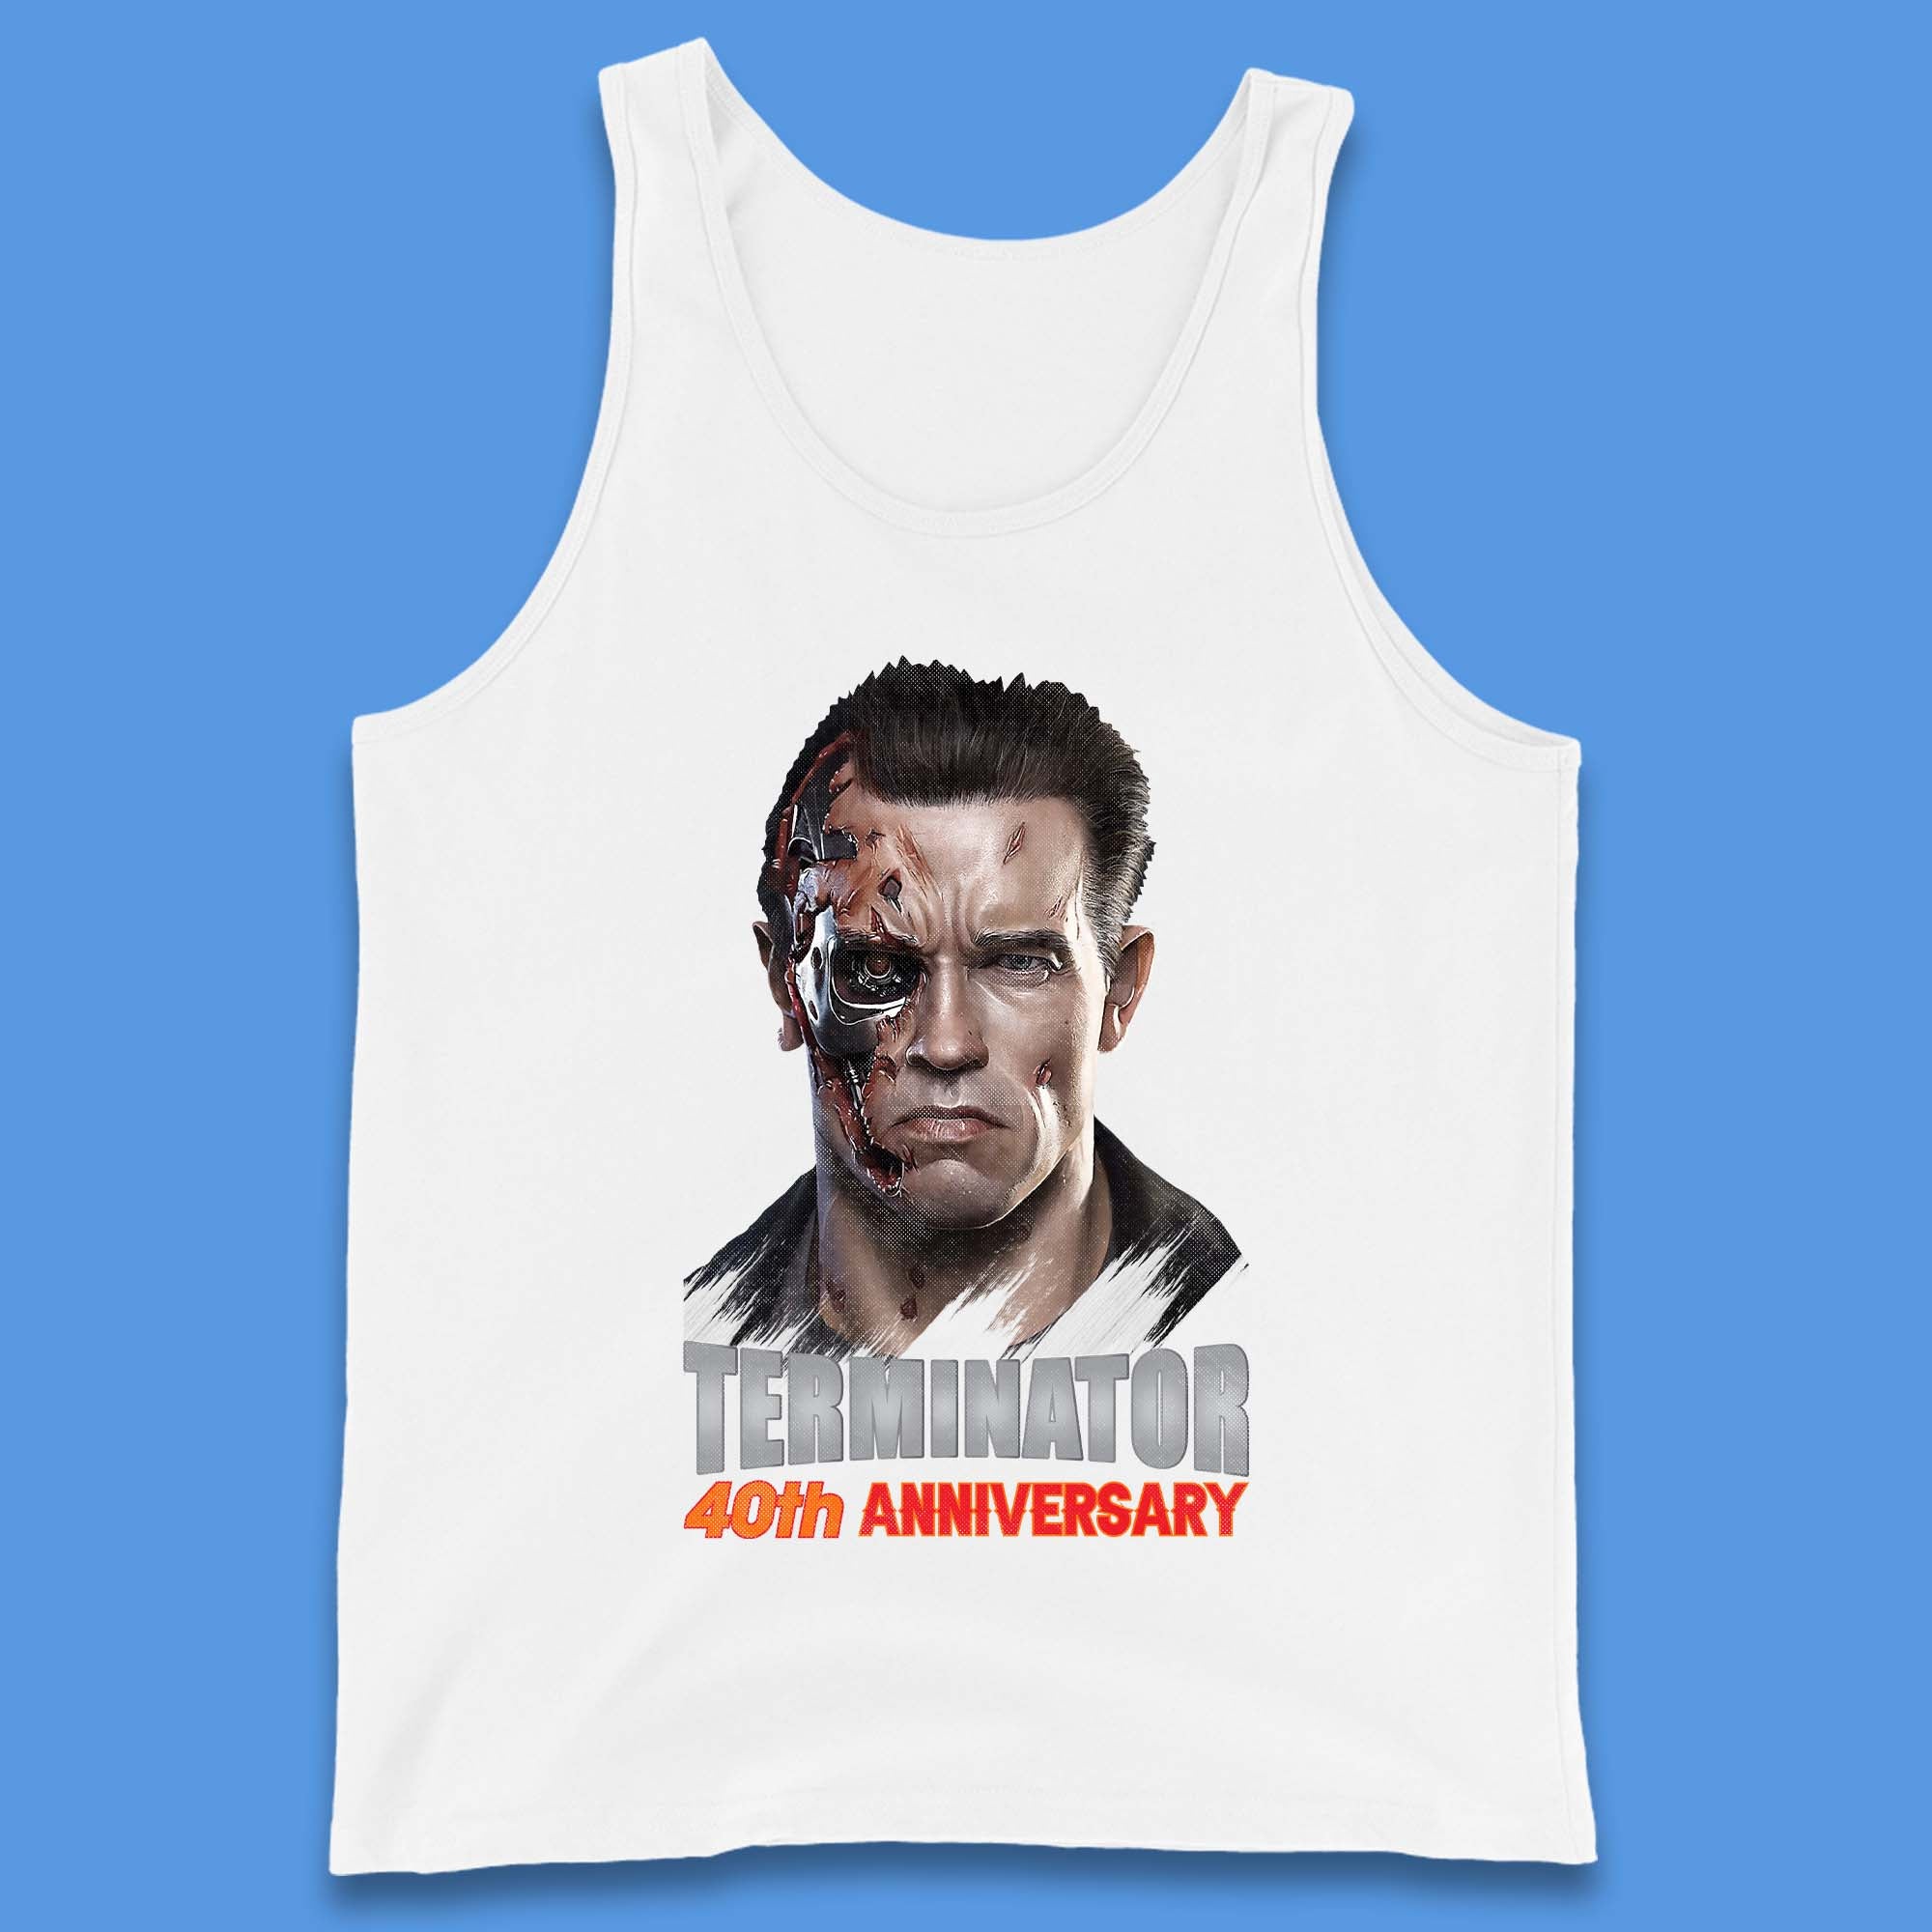 Terminator 40th Anniversary Tank Top